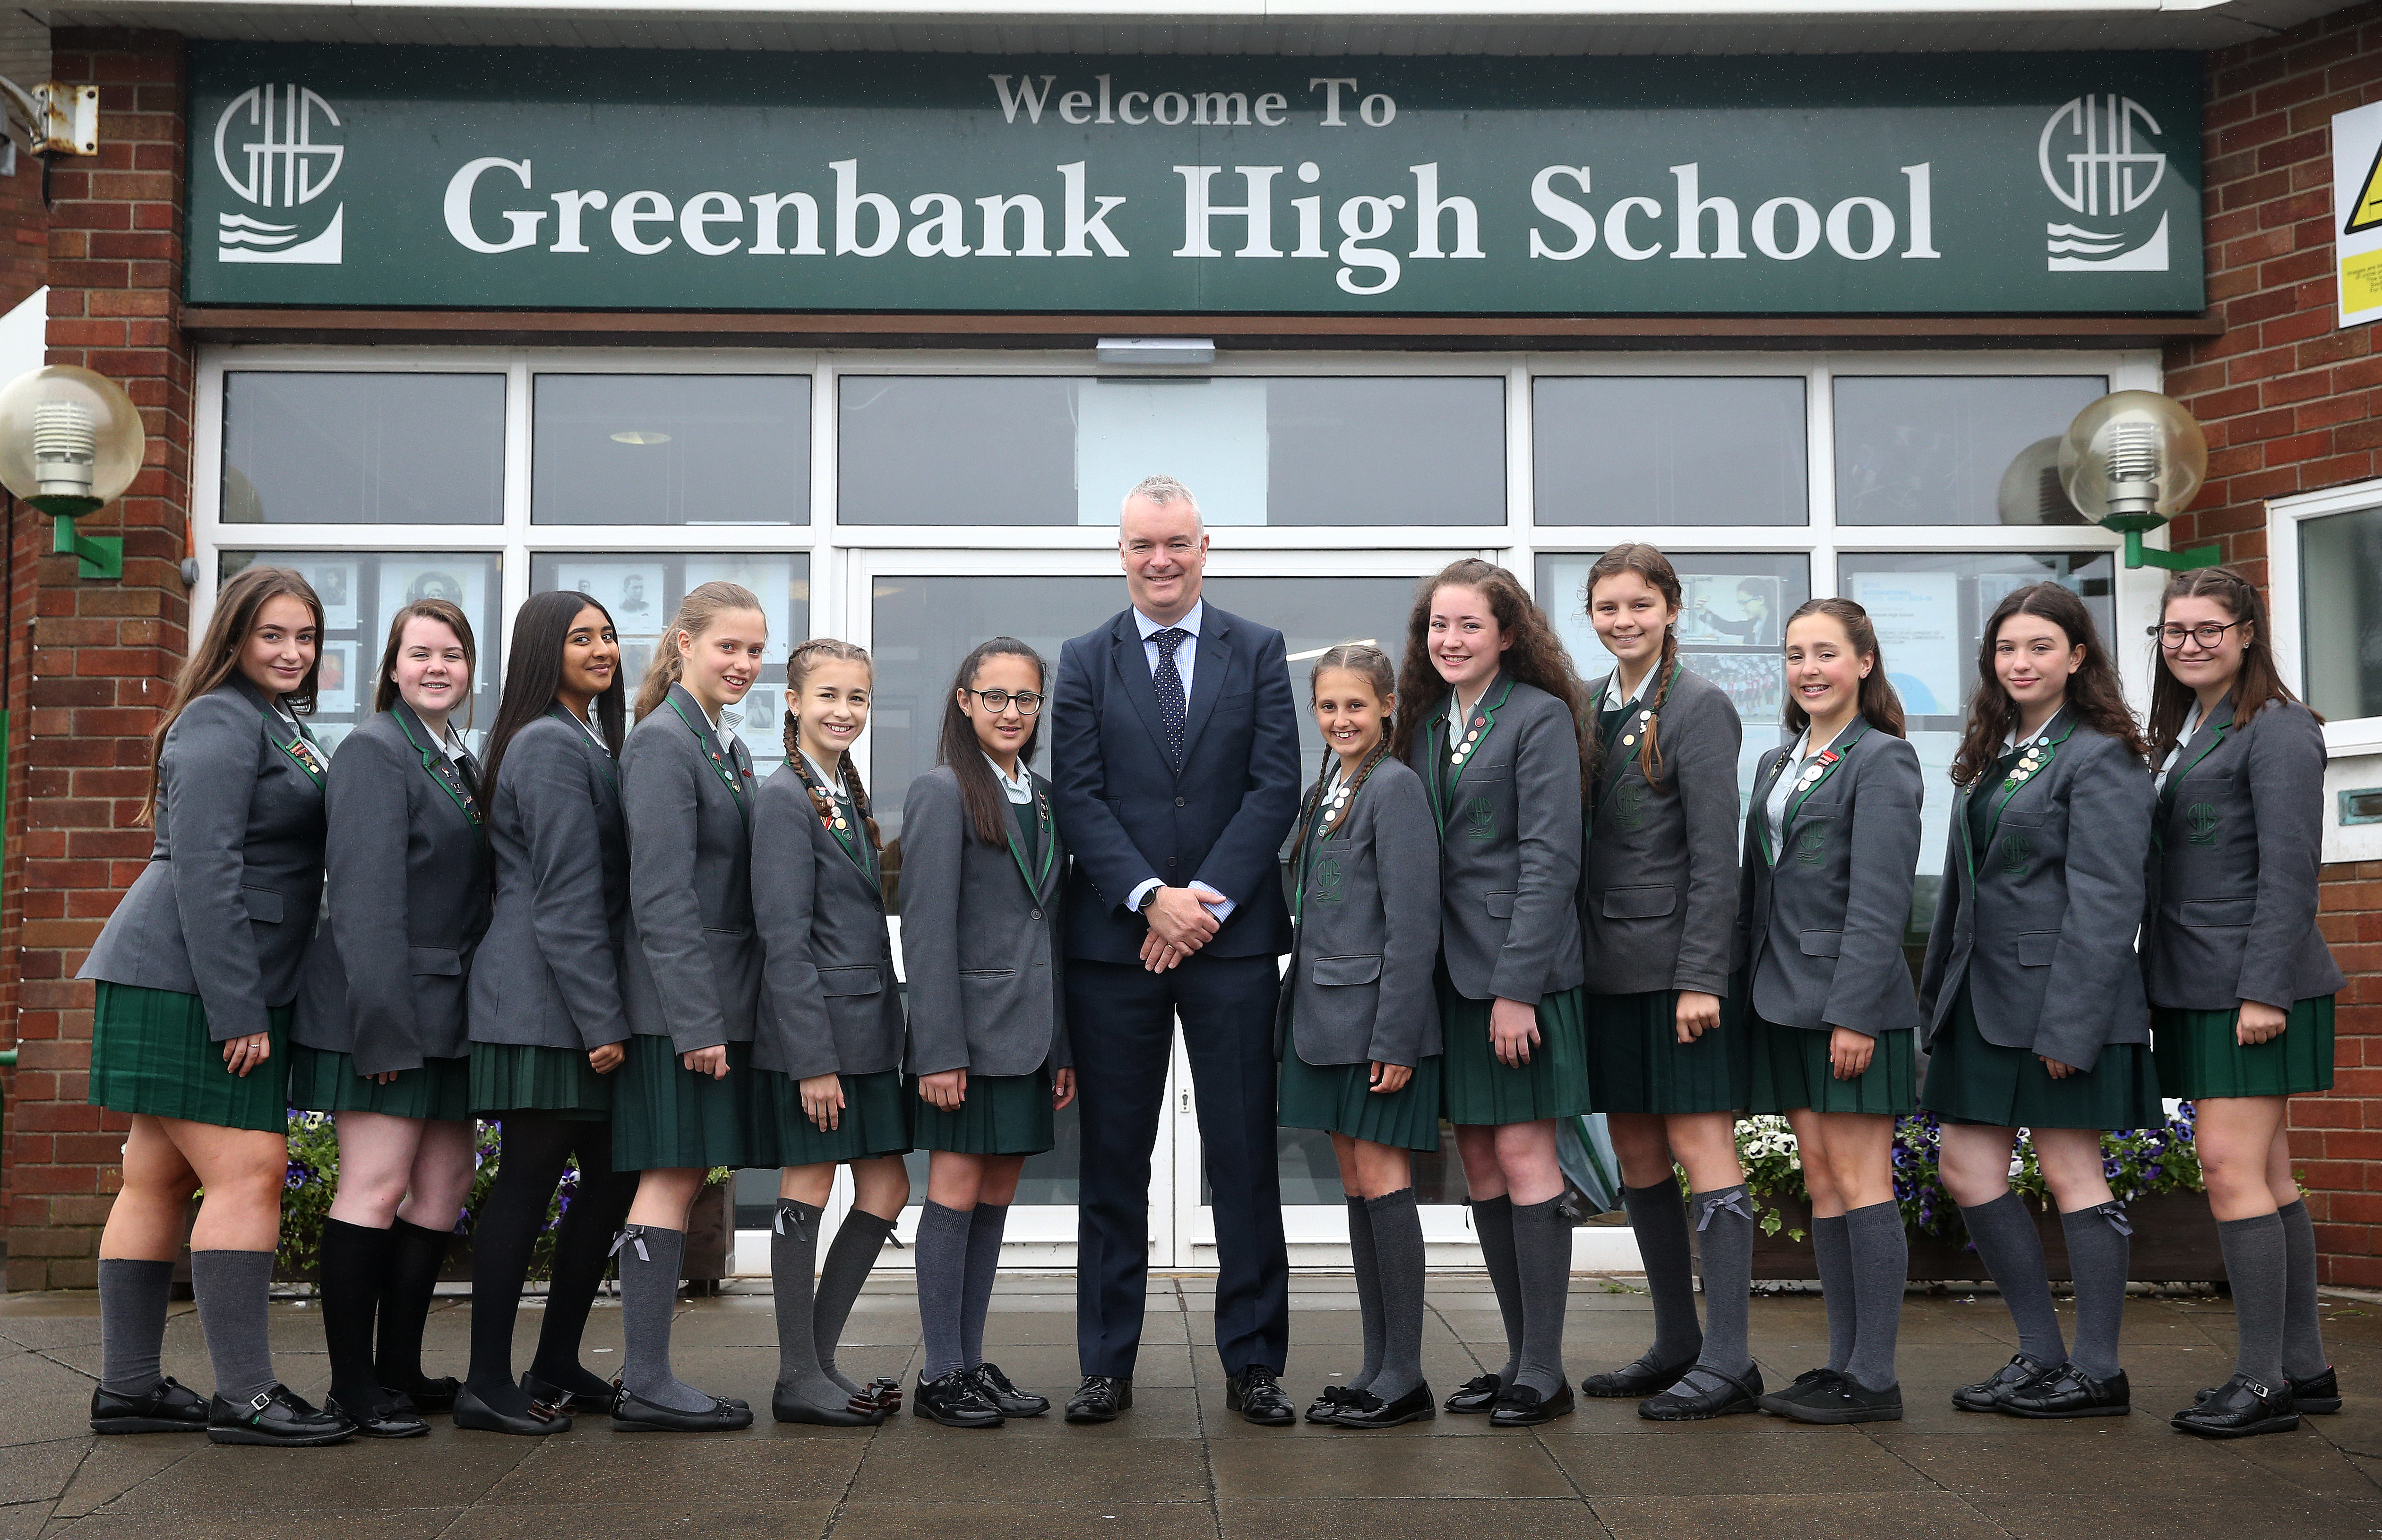 greenbank high school home page